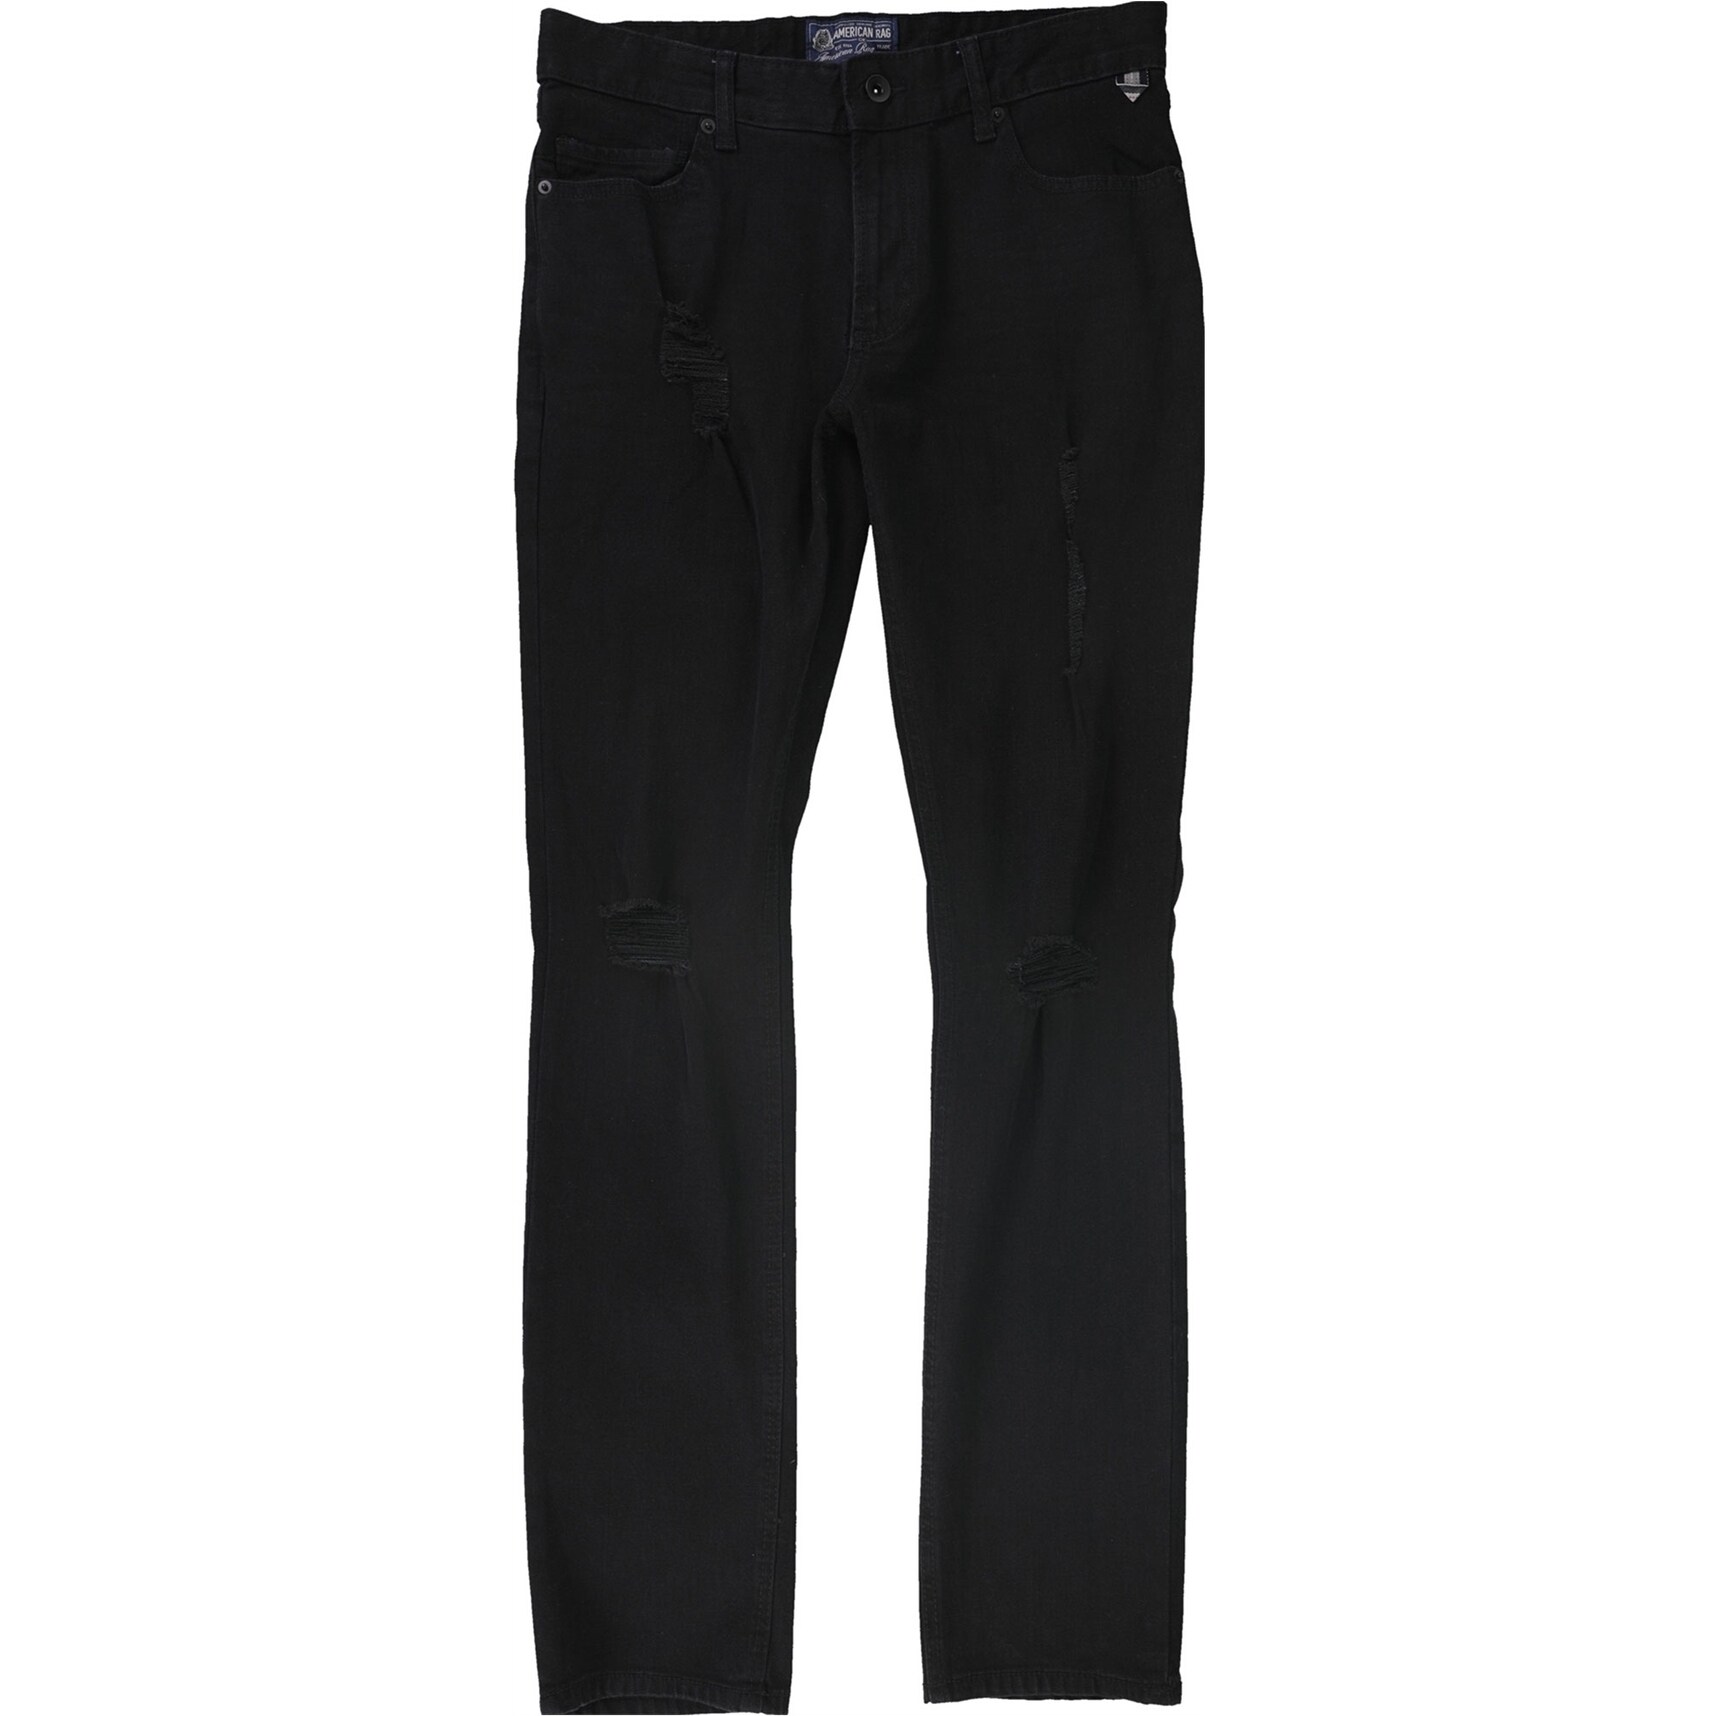 black distressed slim fit jeans mens